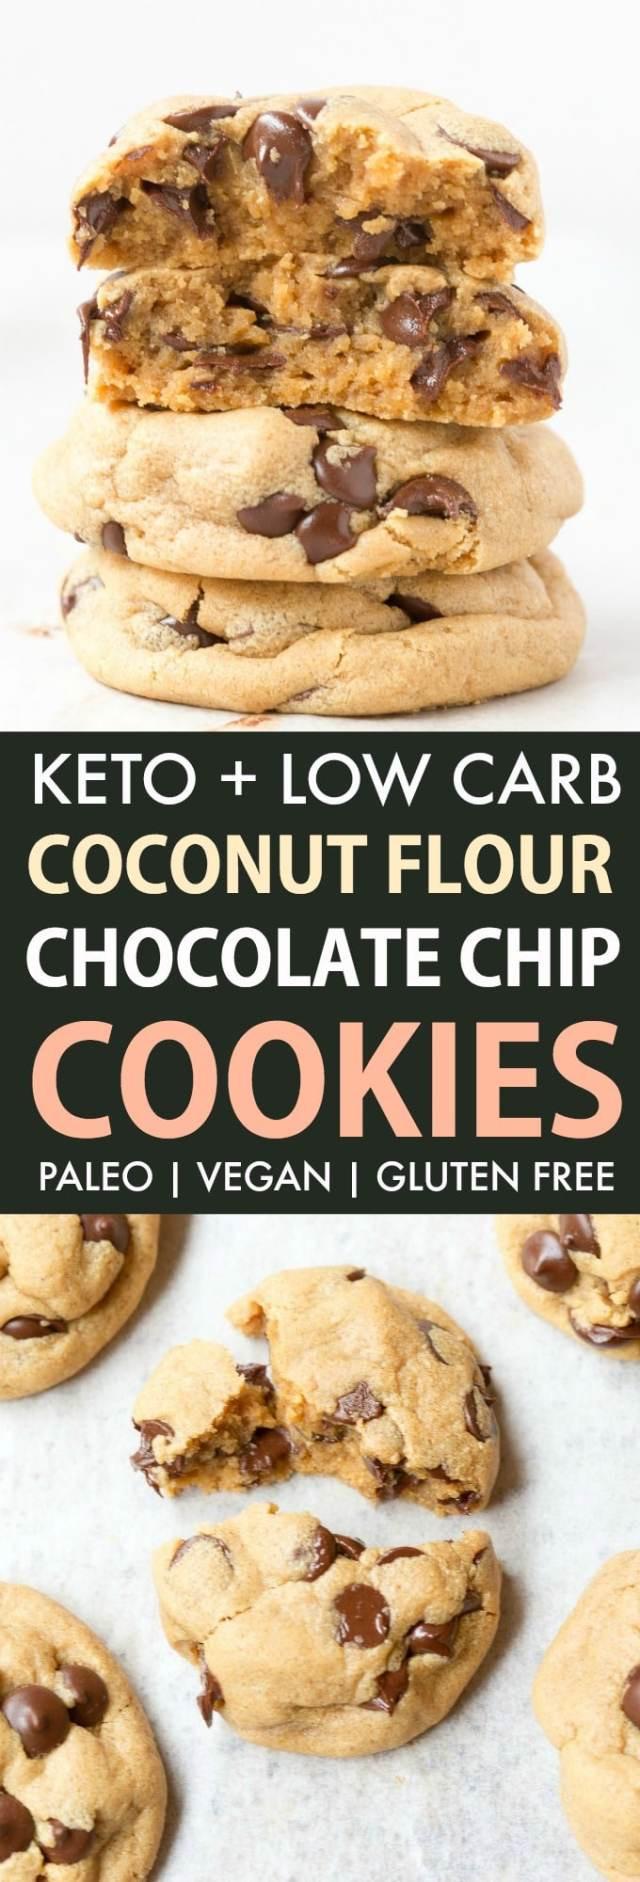 Keto Coconut Flour Recipes
 Keto Coconut Flour Chocolate Chip Cookies Paleo Vegan